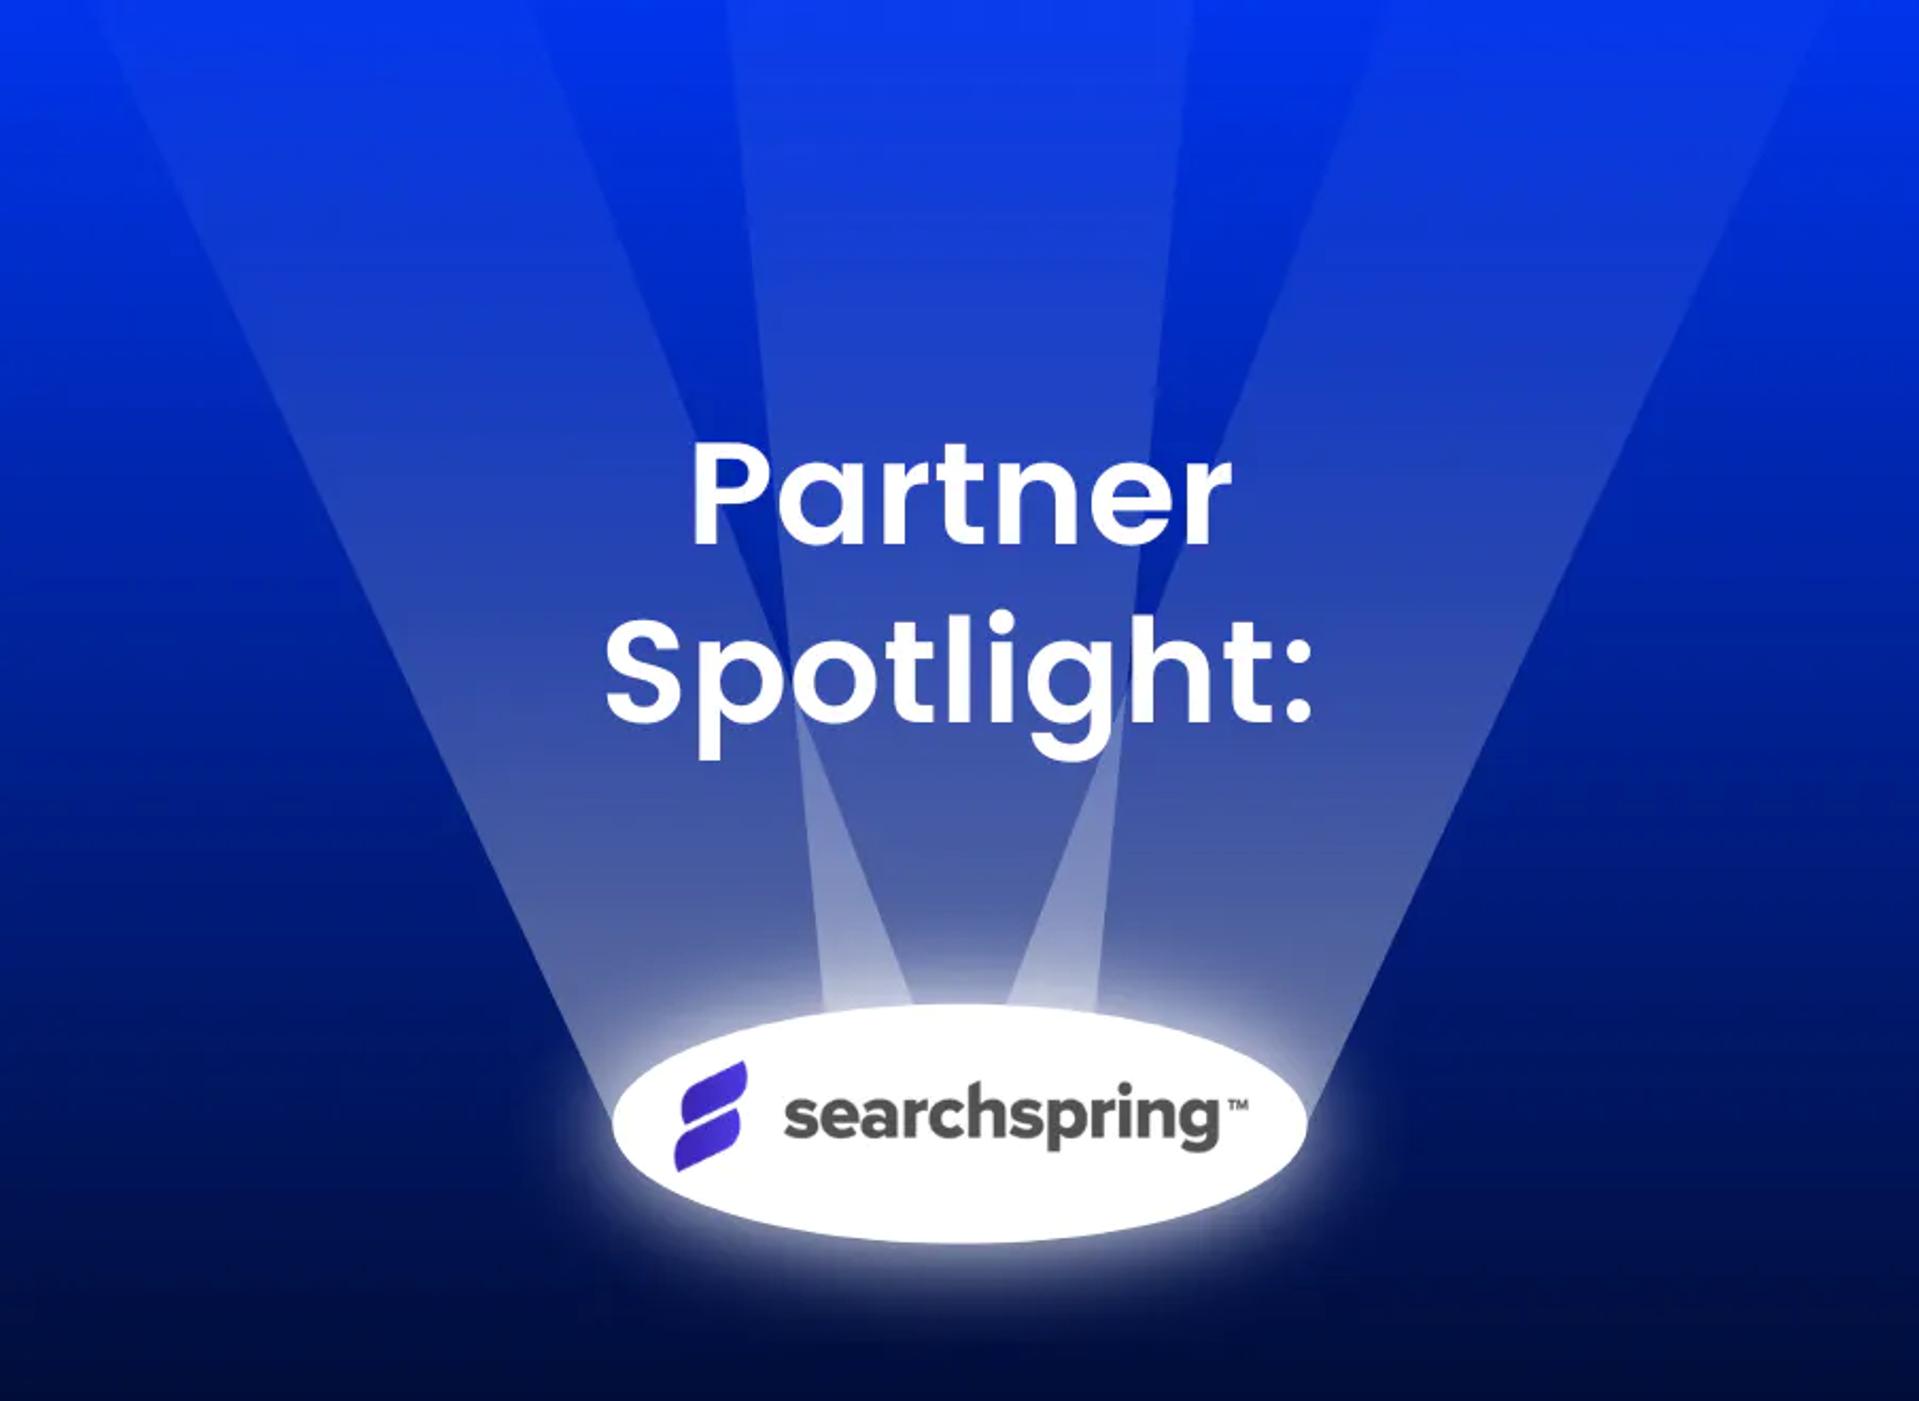 A spotlight on the Searchspring logo